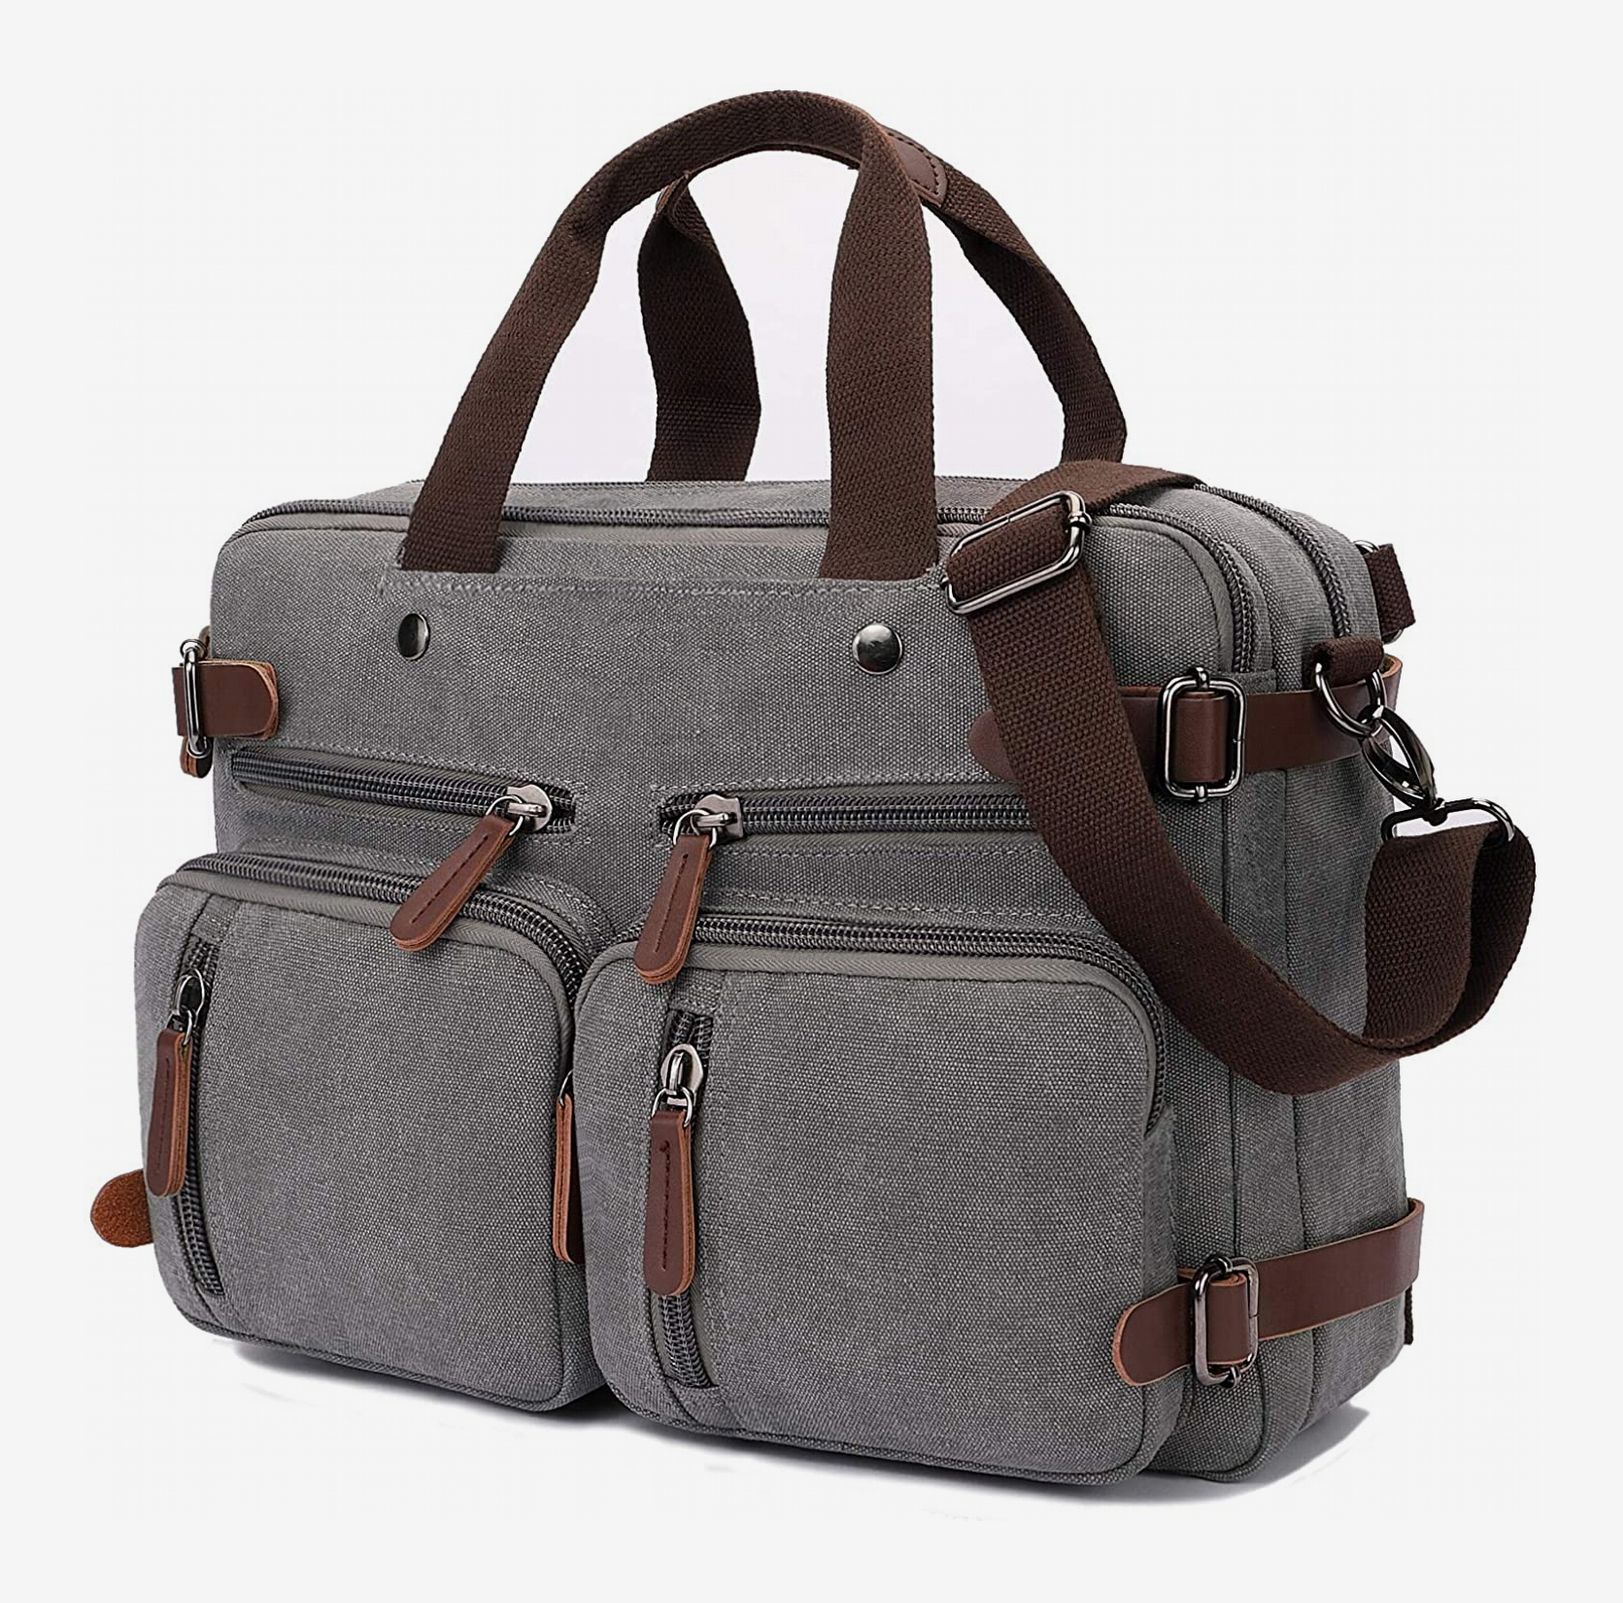 Plambag Canvas Messenger Bag Small Travel School Crossbody Bag Fit iPad Coffee